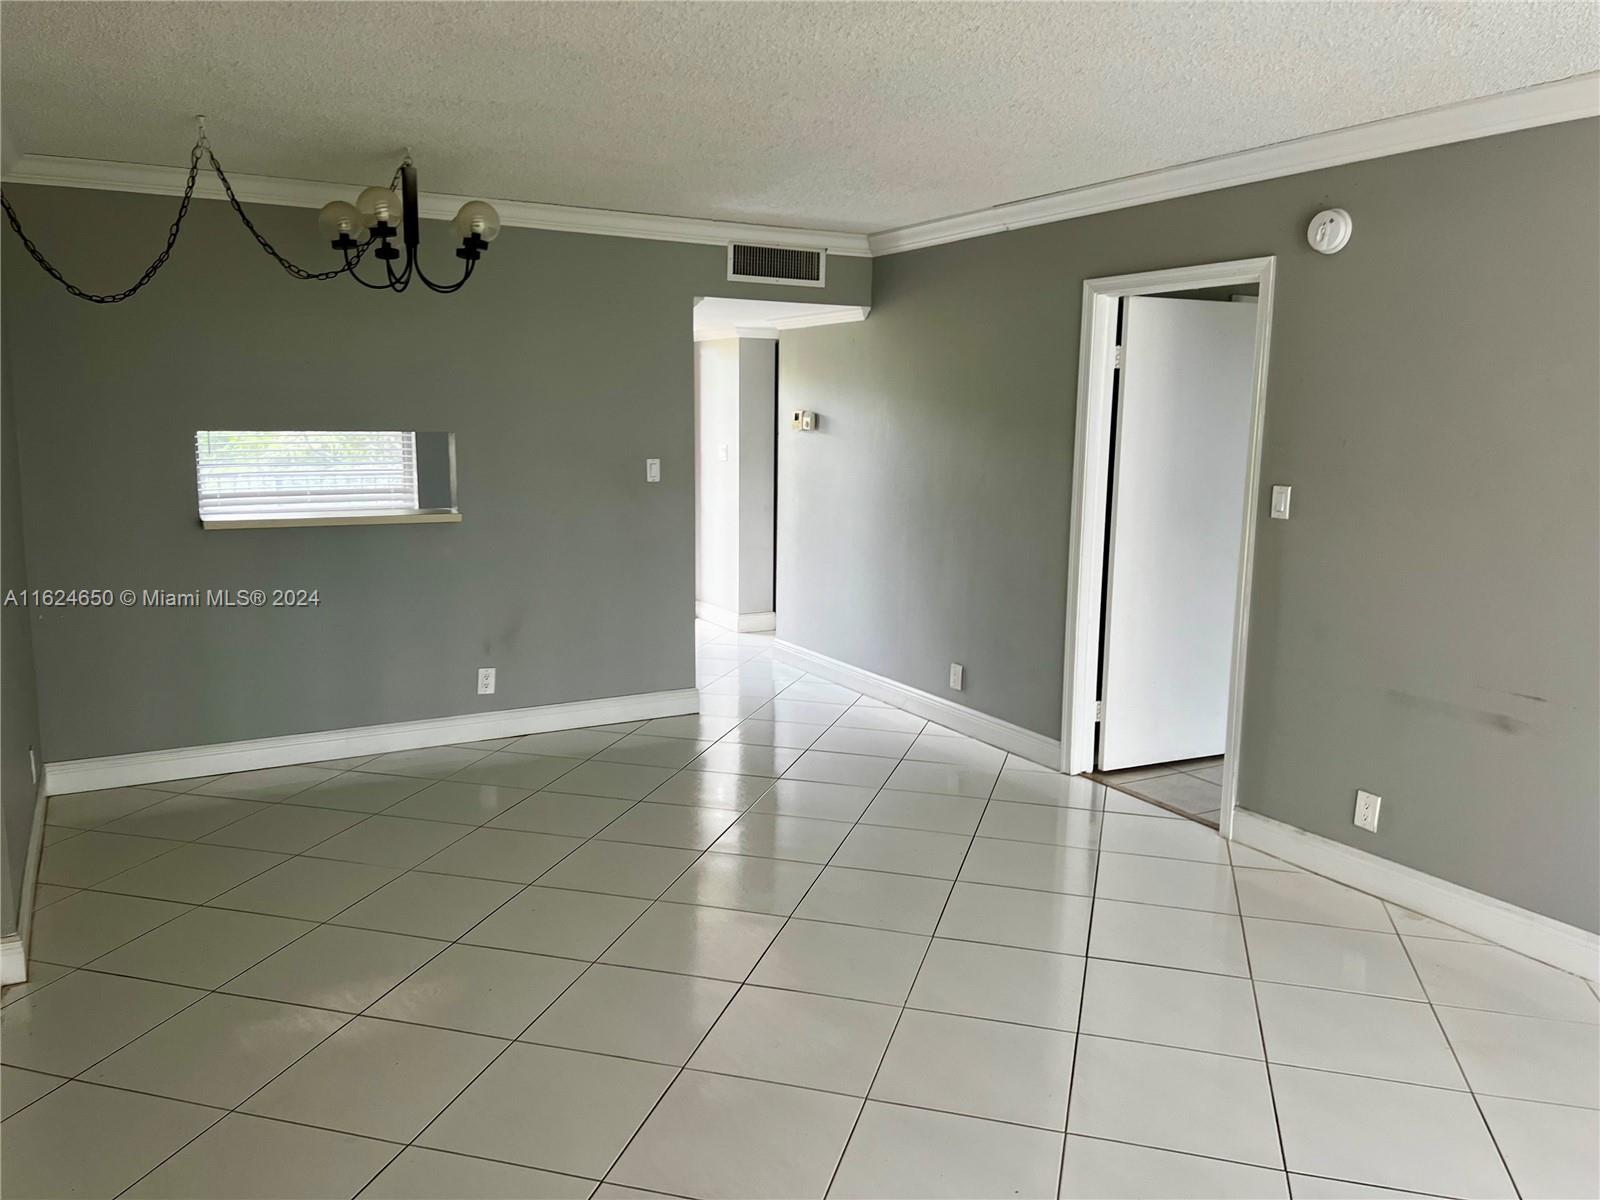 Rental Property at 3101 Nw 47th Ter 428, Lauderdale Lakes, Broward County, Florida - Bedrooms: 1 
Bathrooms: 2  - $1,700 MO.